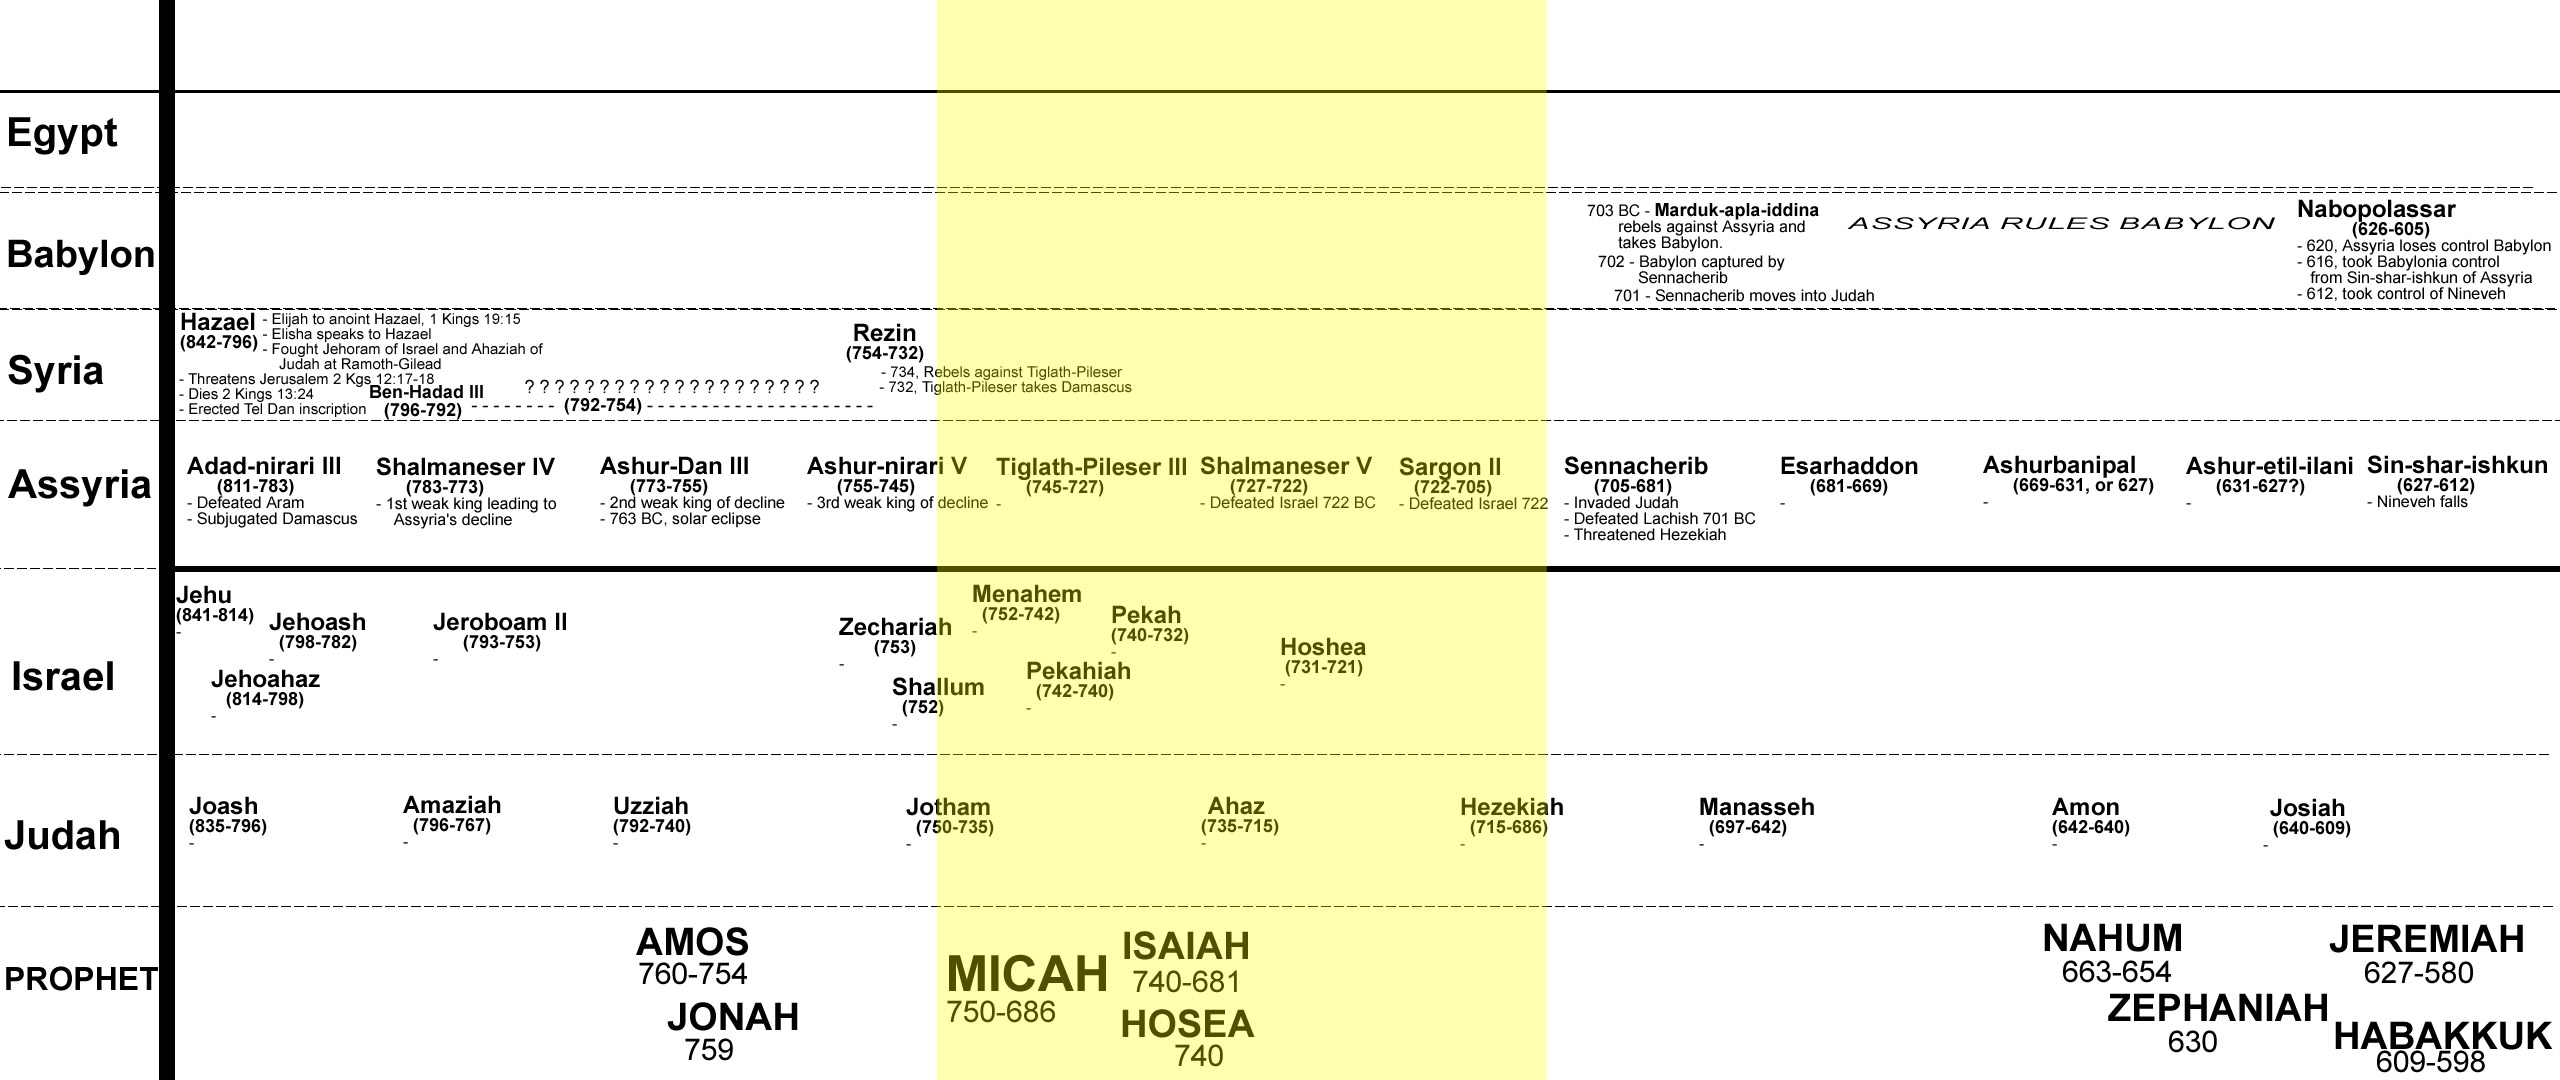 190F Micah Minor Prophets History Kings Assyria colorbar